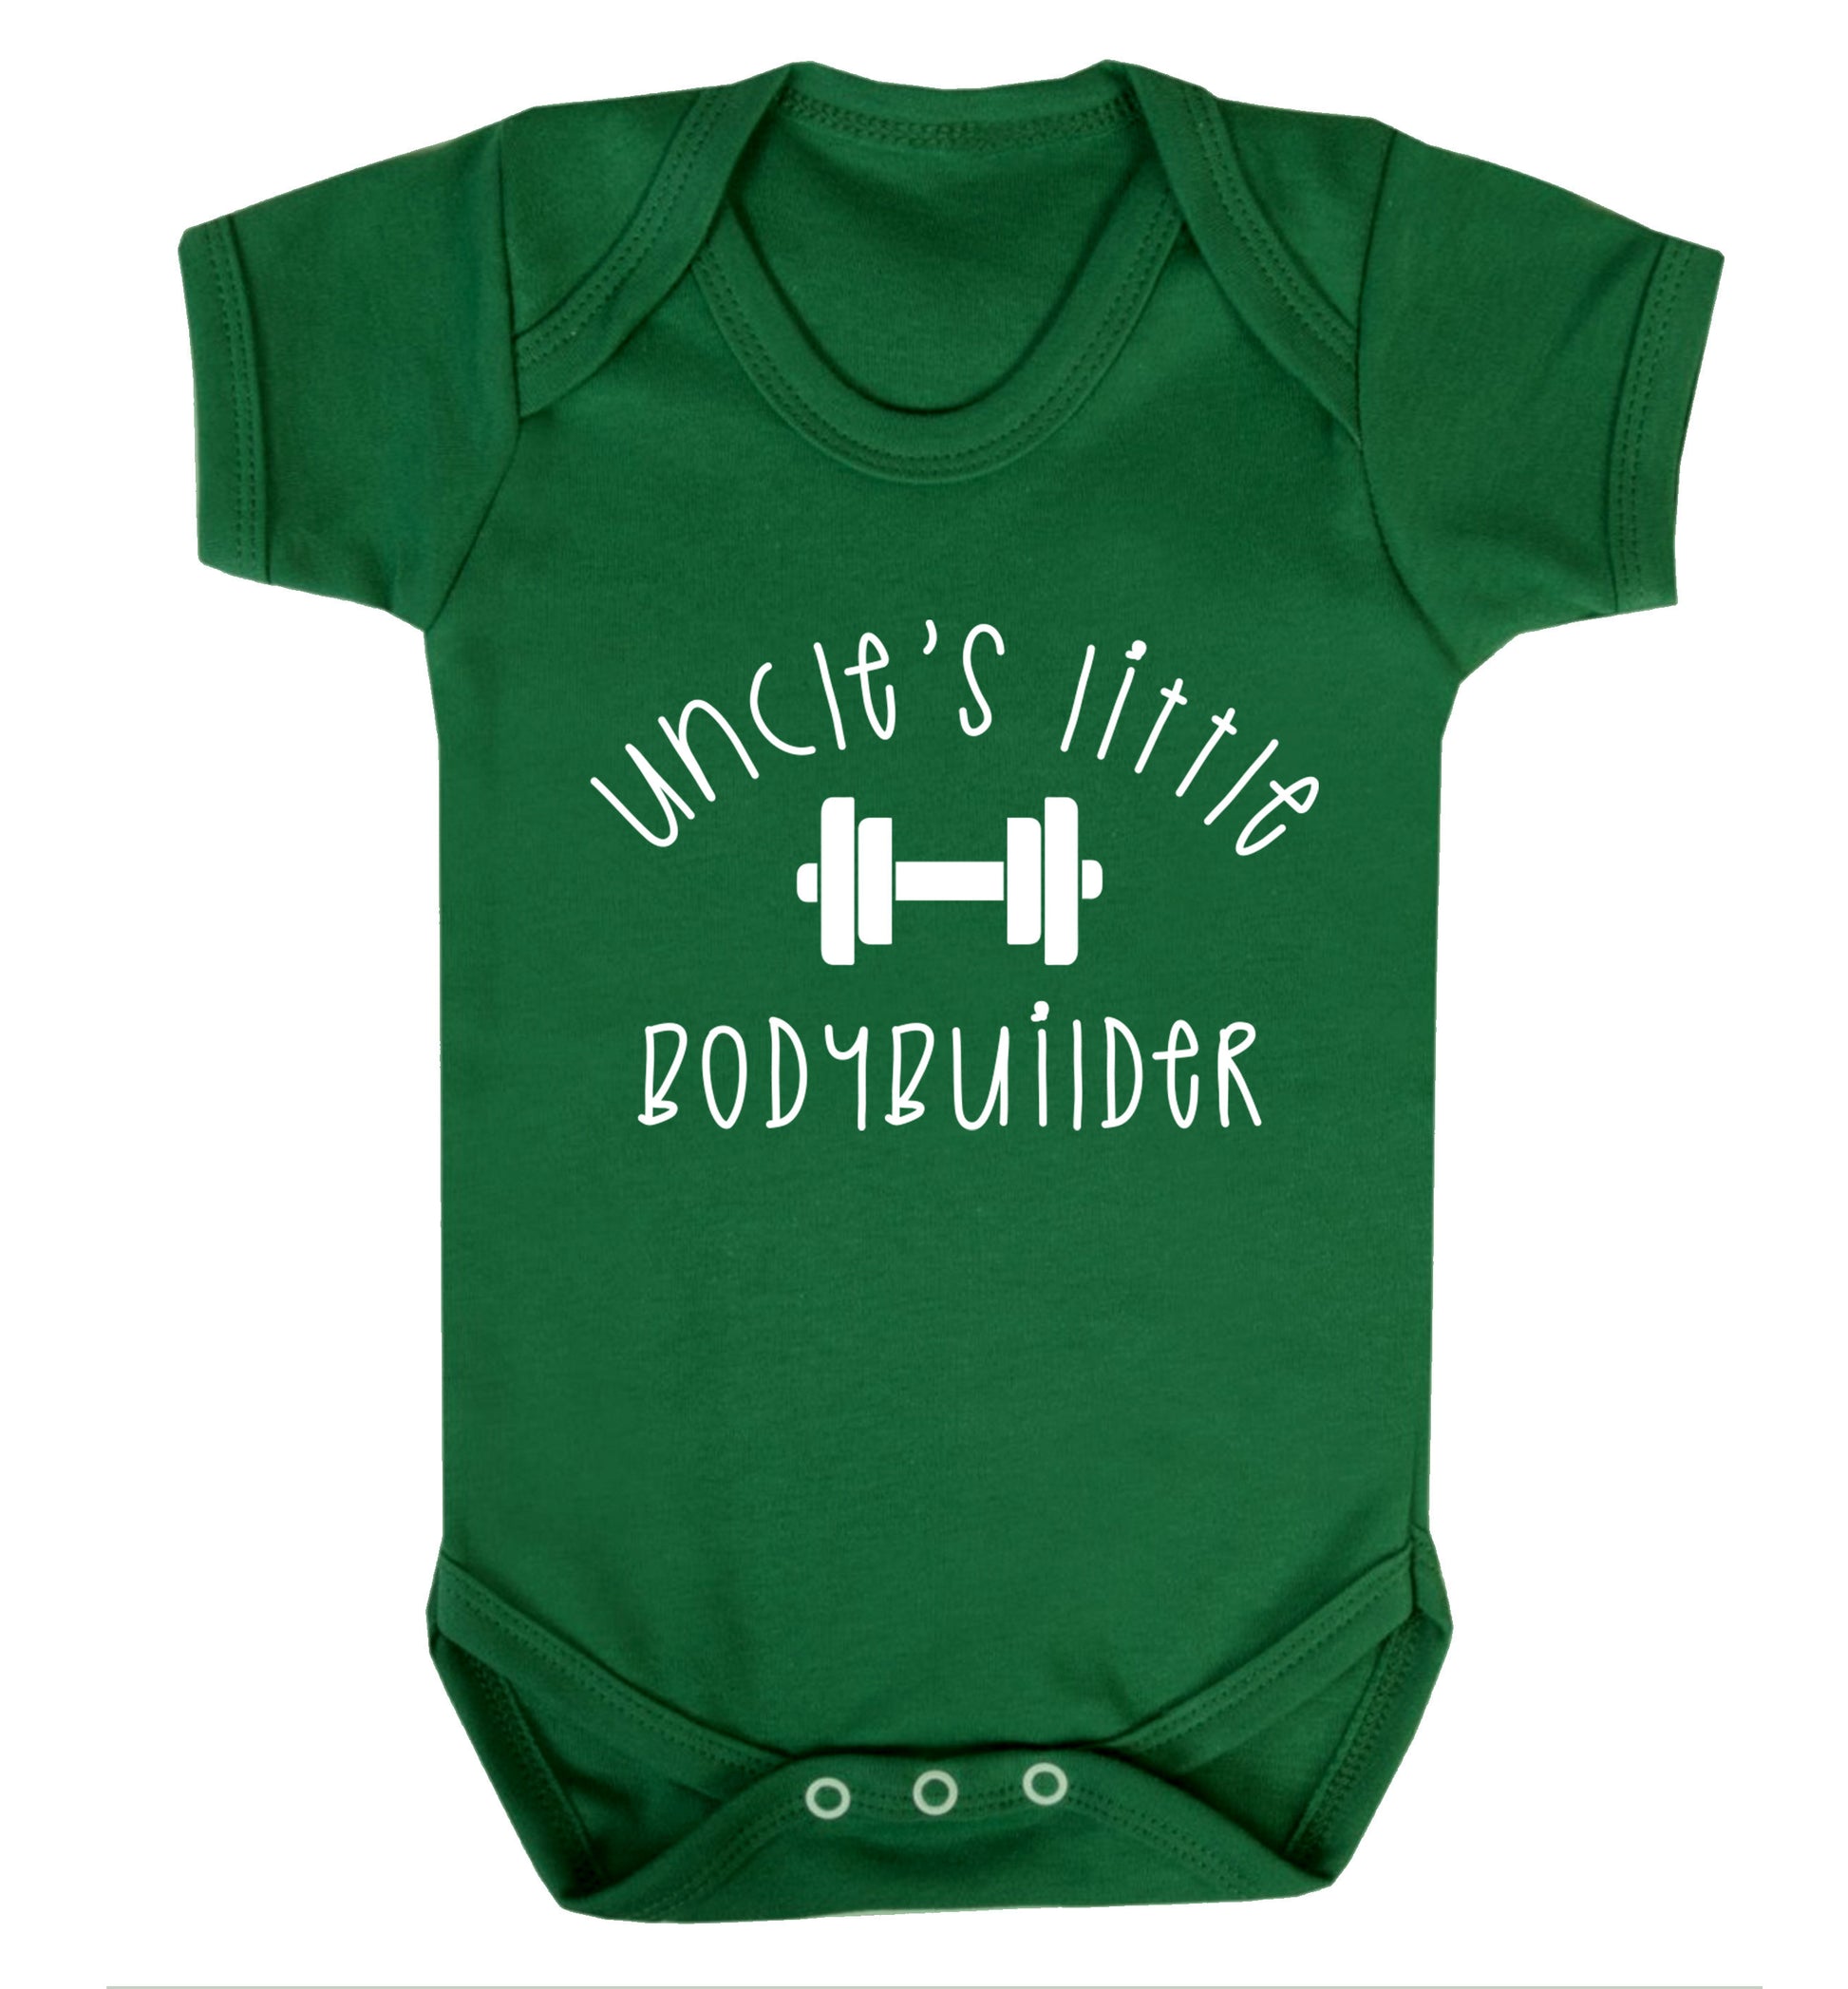 Uncle's little bodybuilder Baby Vest green 18-24 months